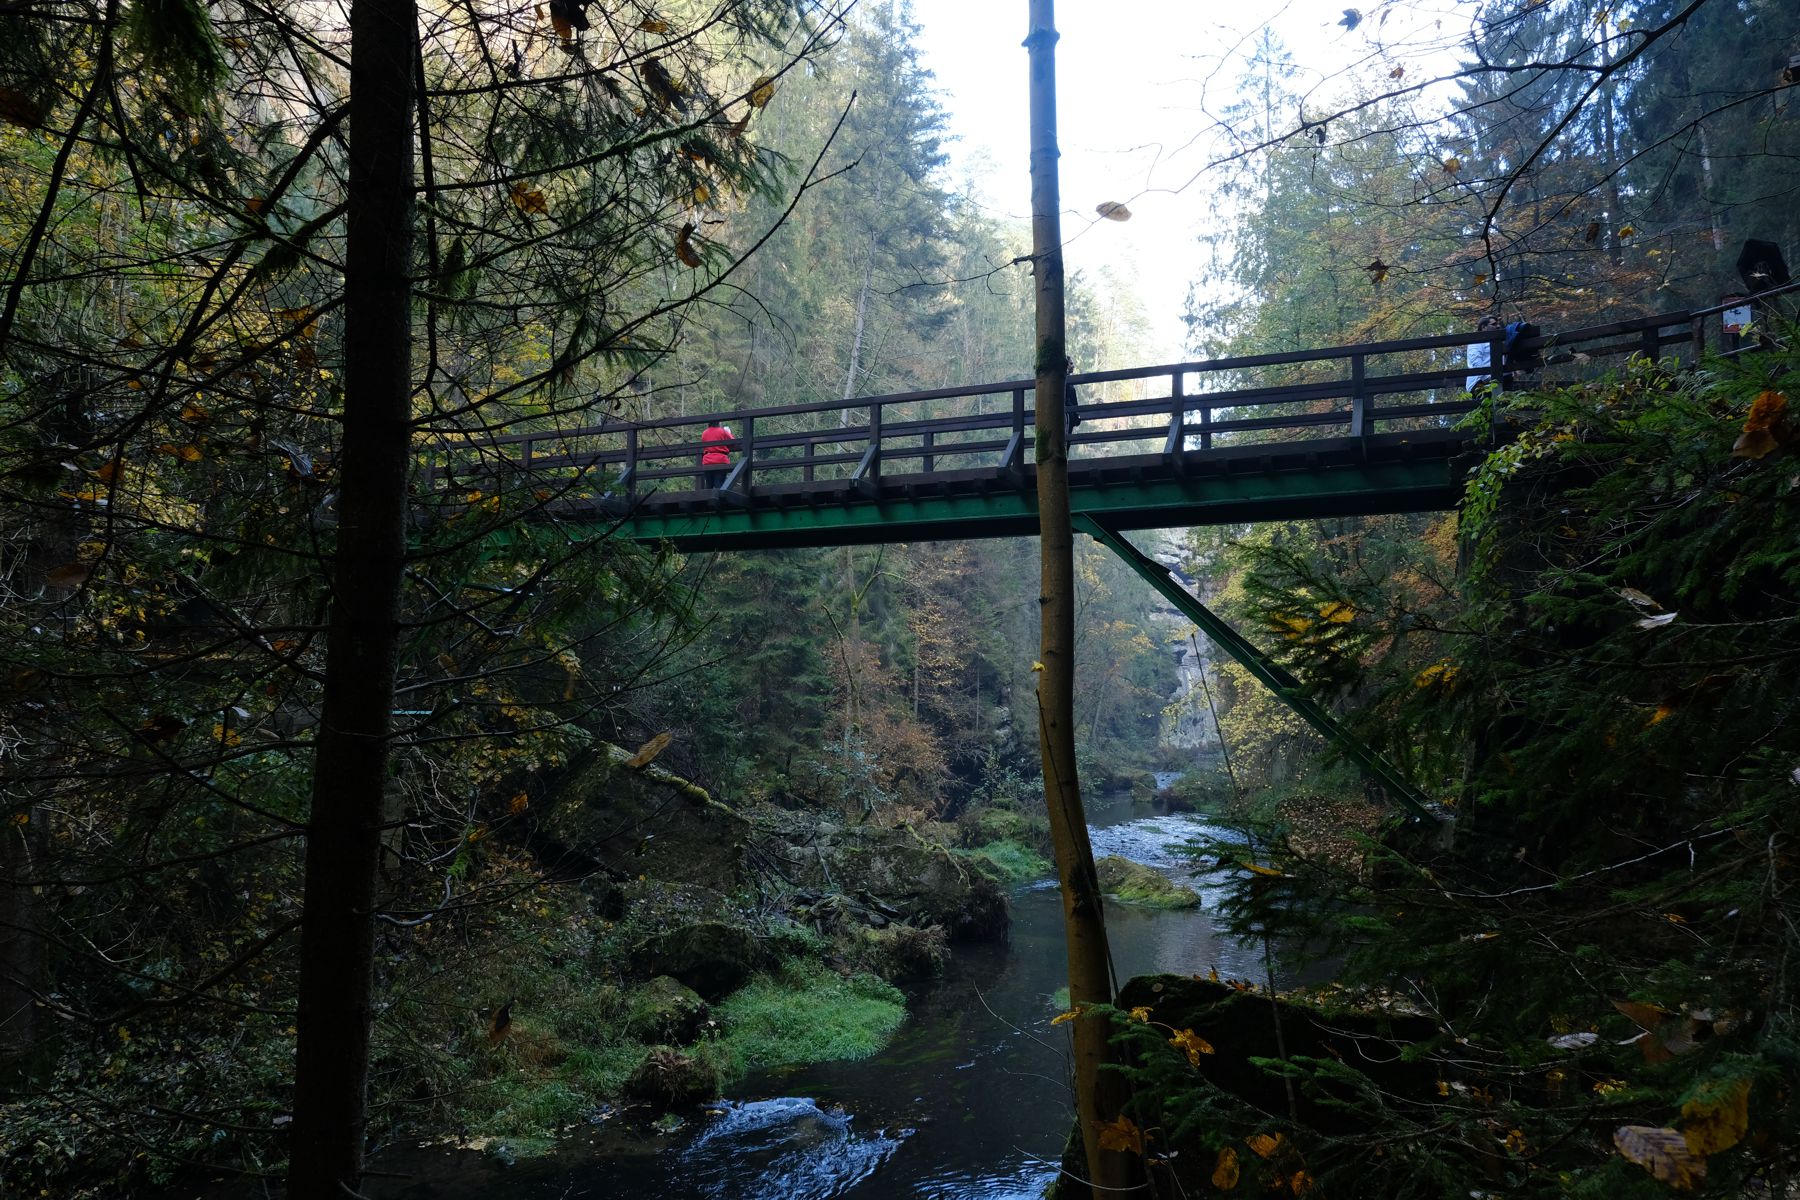 footbridge over stream in forest